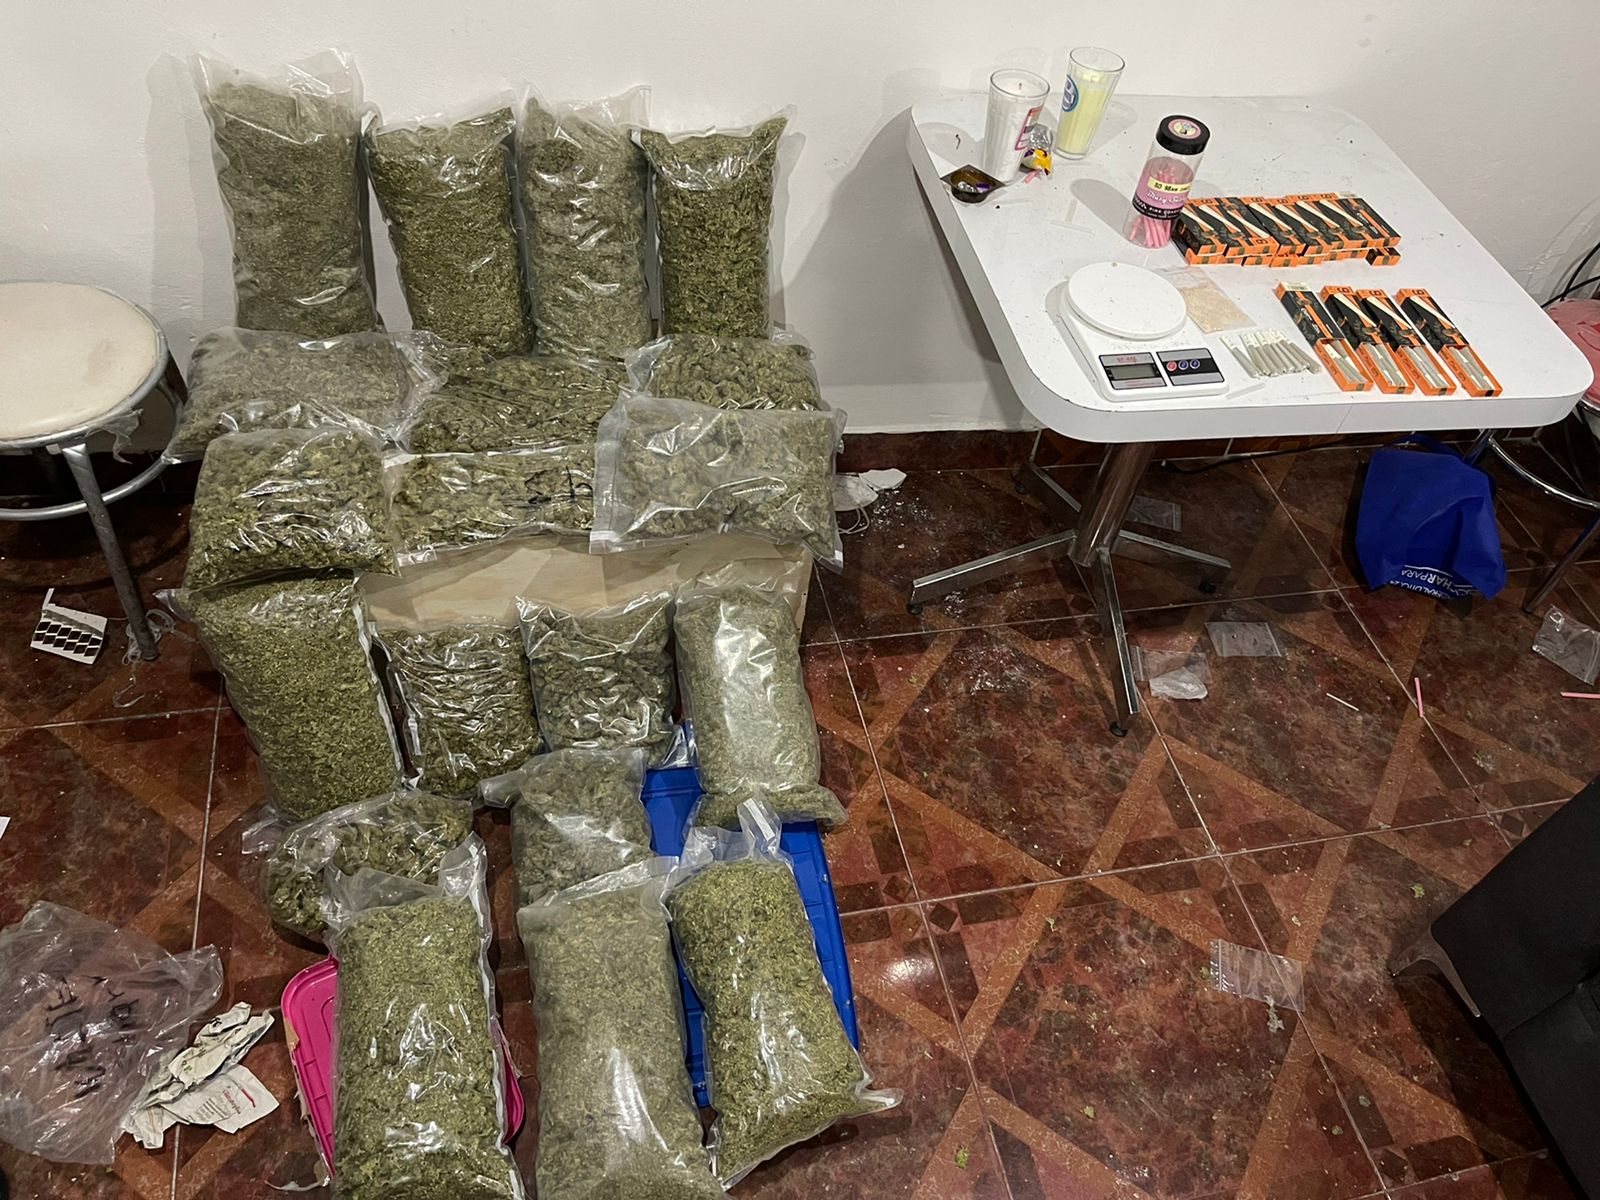 Asegura FGJEM 13.5 kilogramos de marihuana y mercancía robada, durante cateo en un inmueble en Naucalpan